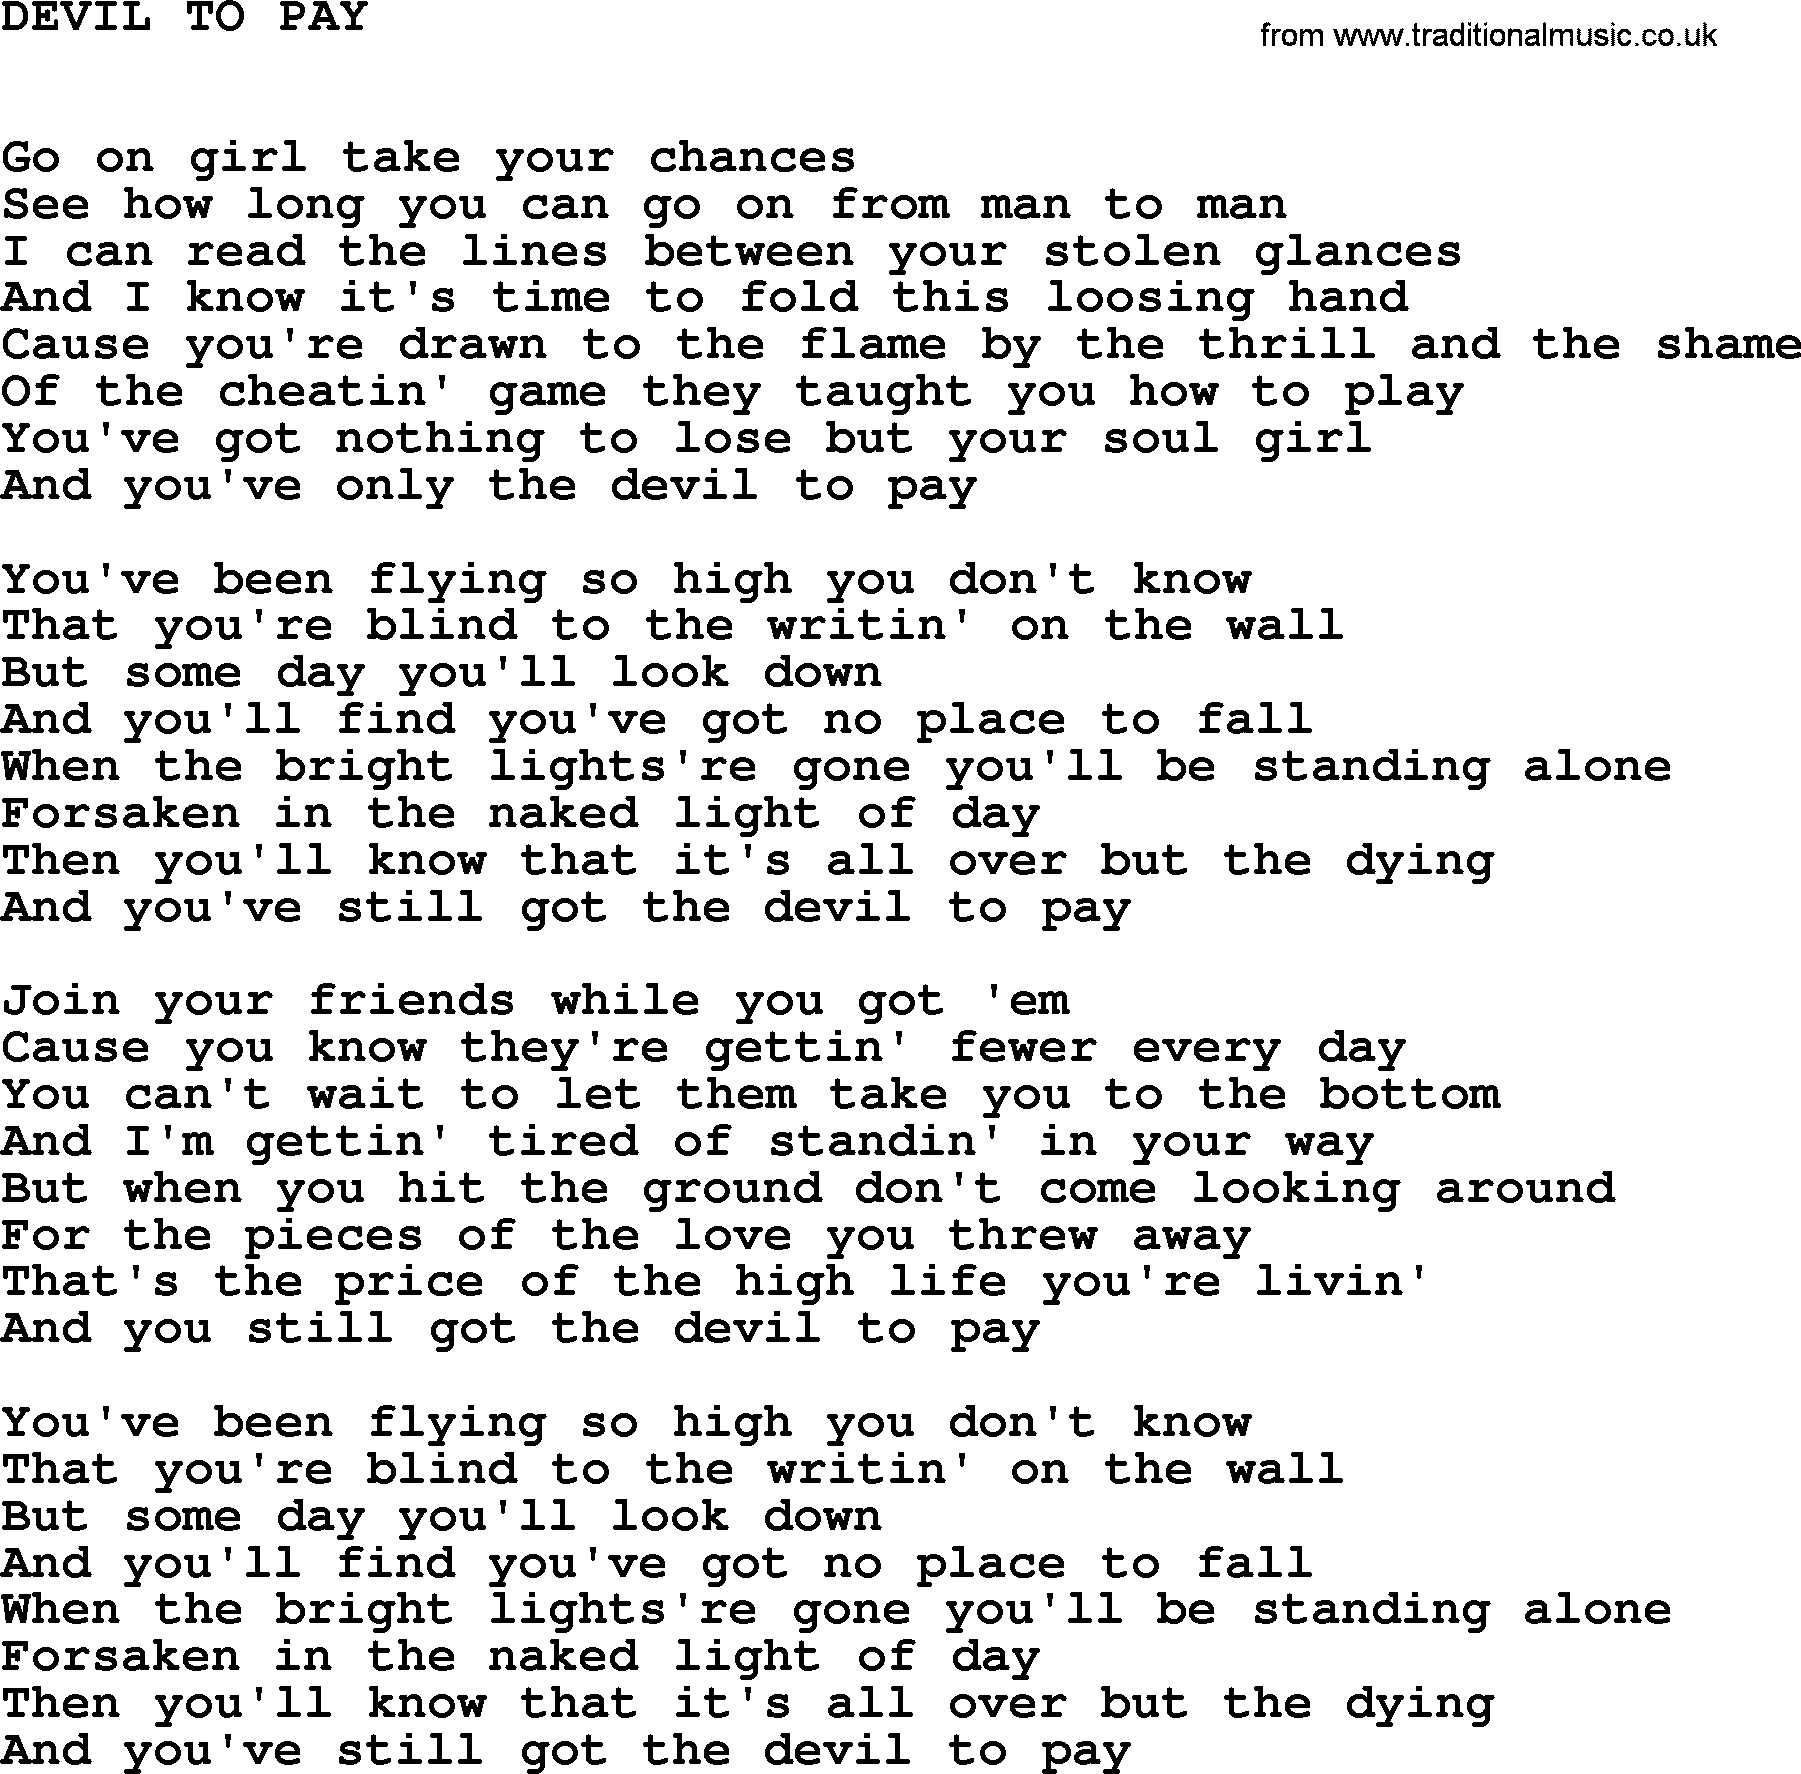 Johnny Cash song Devil To Pay.txt lyrics